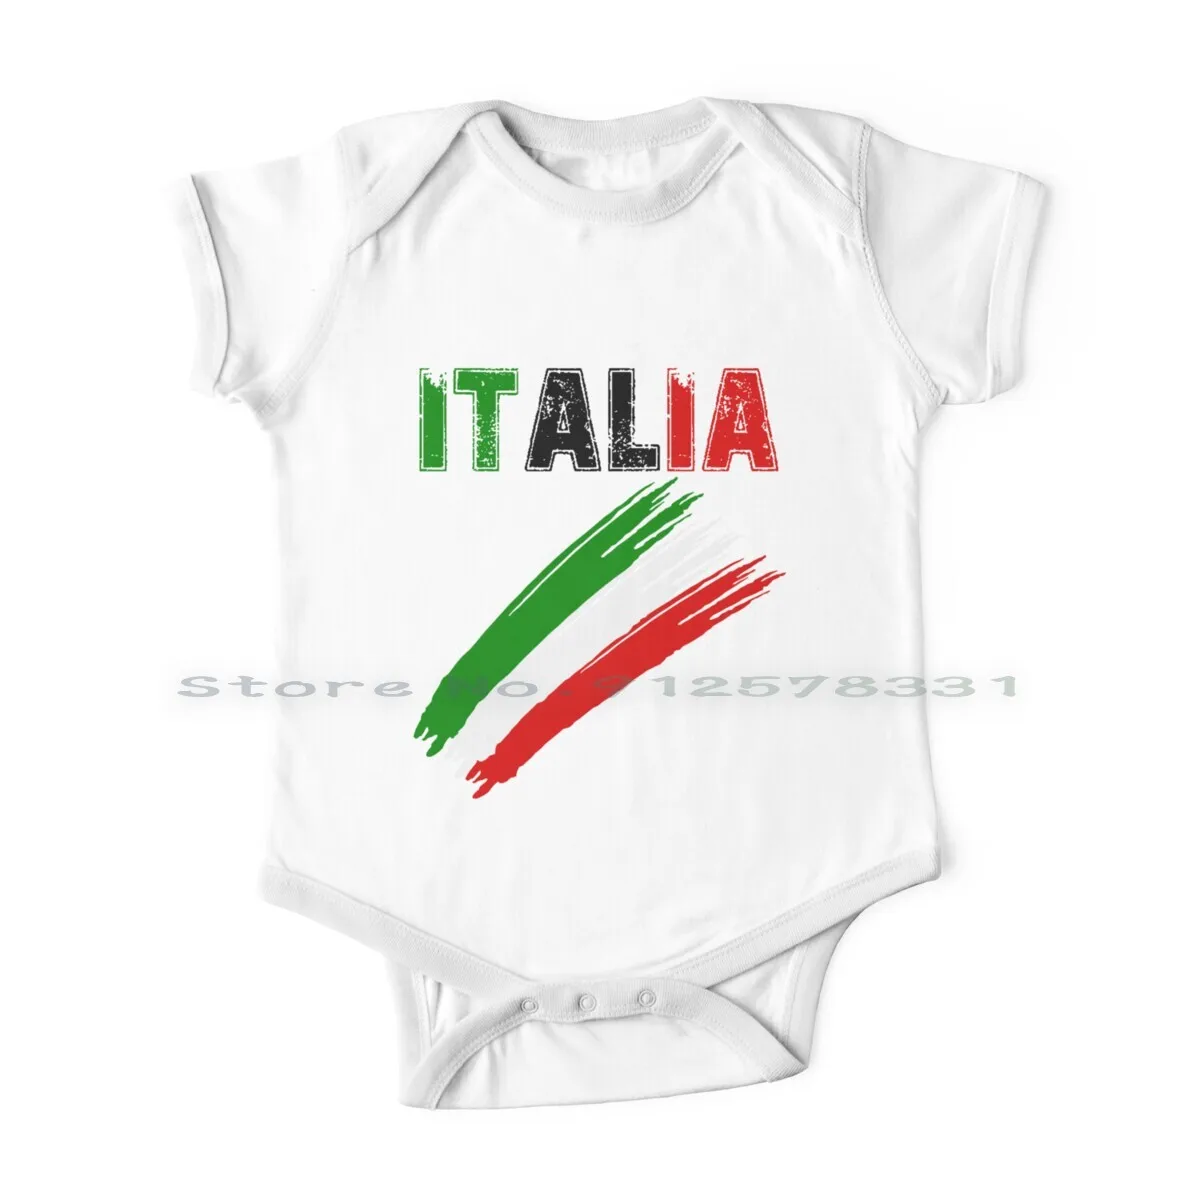 Shopagift Champions Italy Flag Baby Sleepsuit Romper 